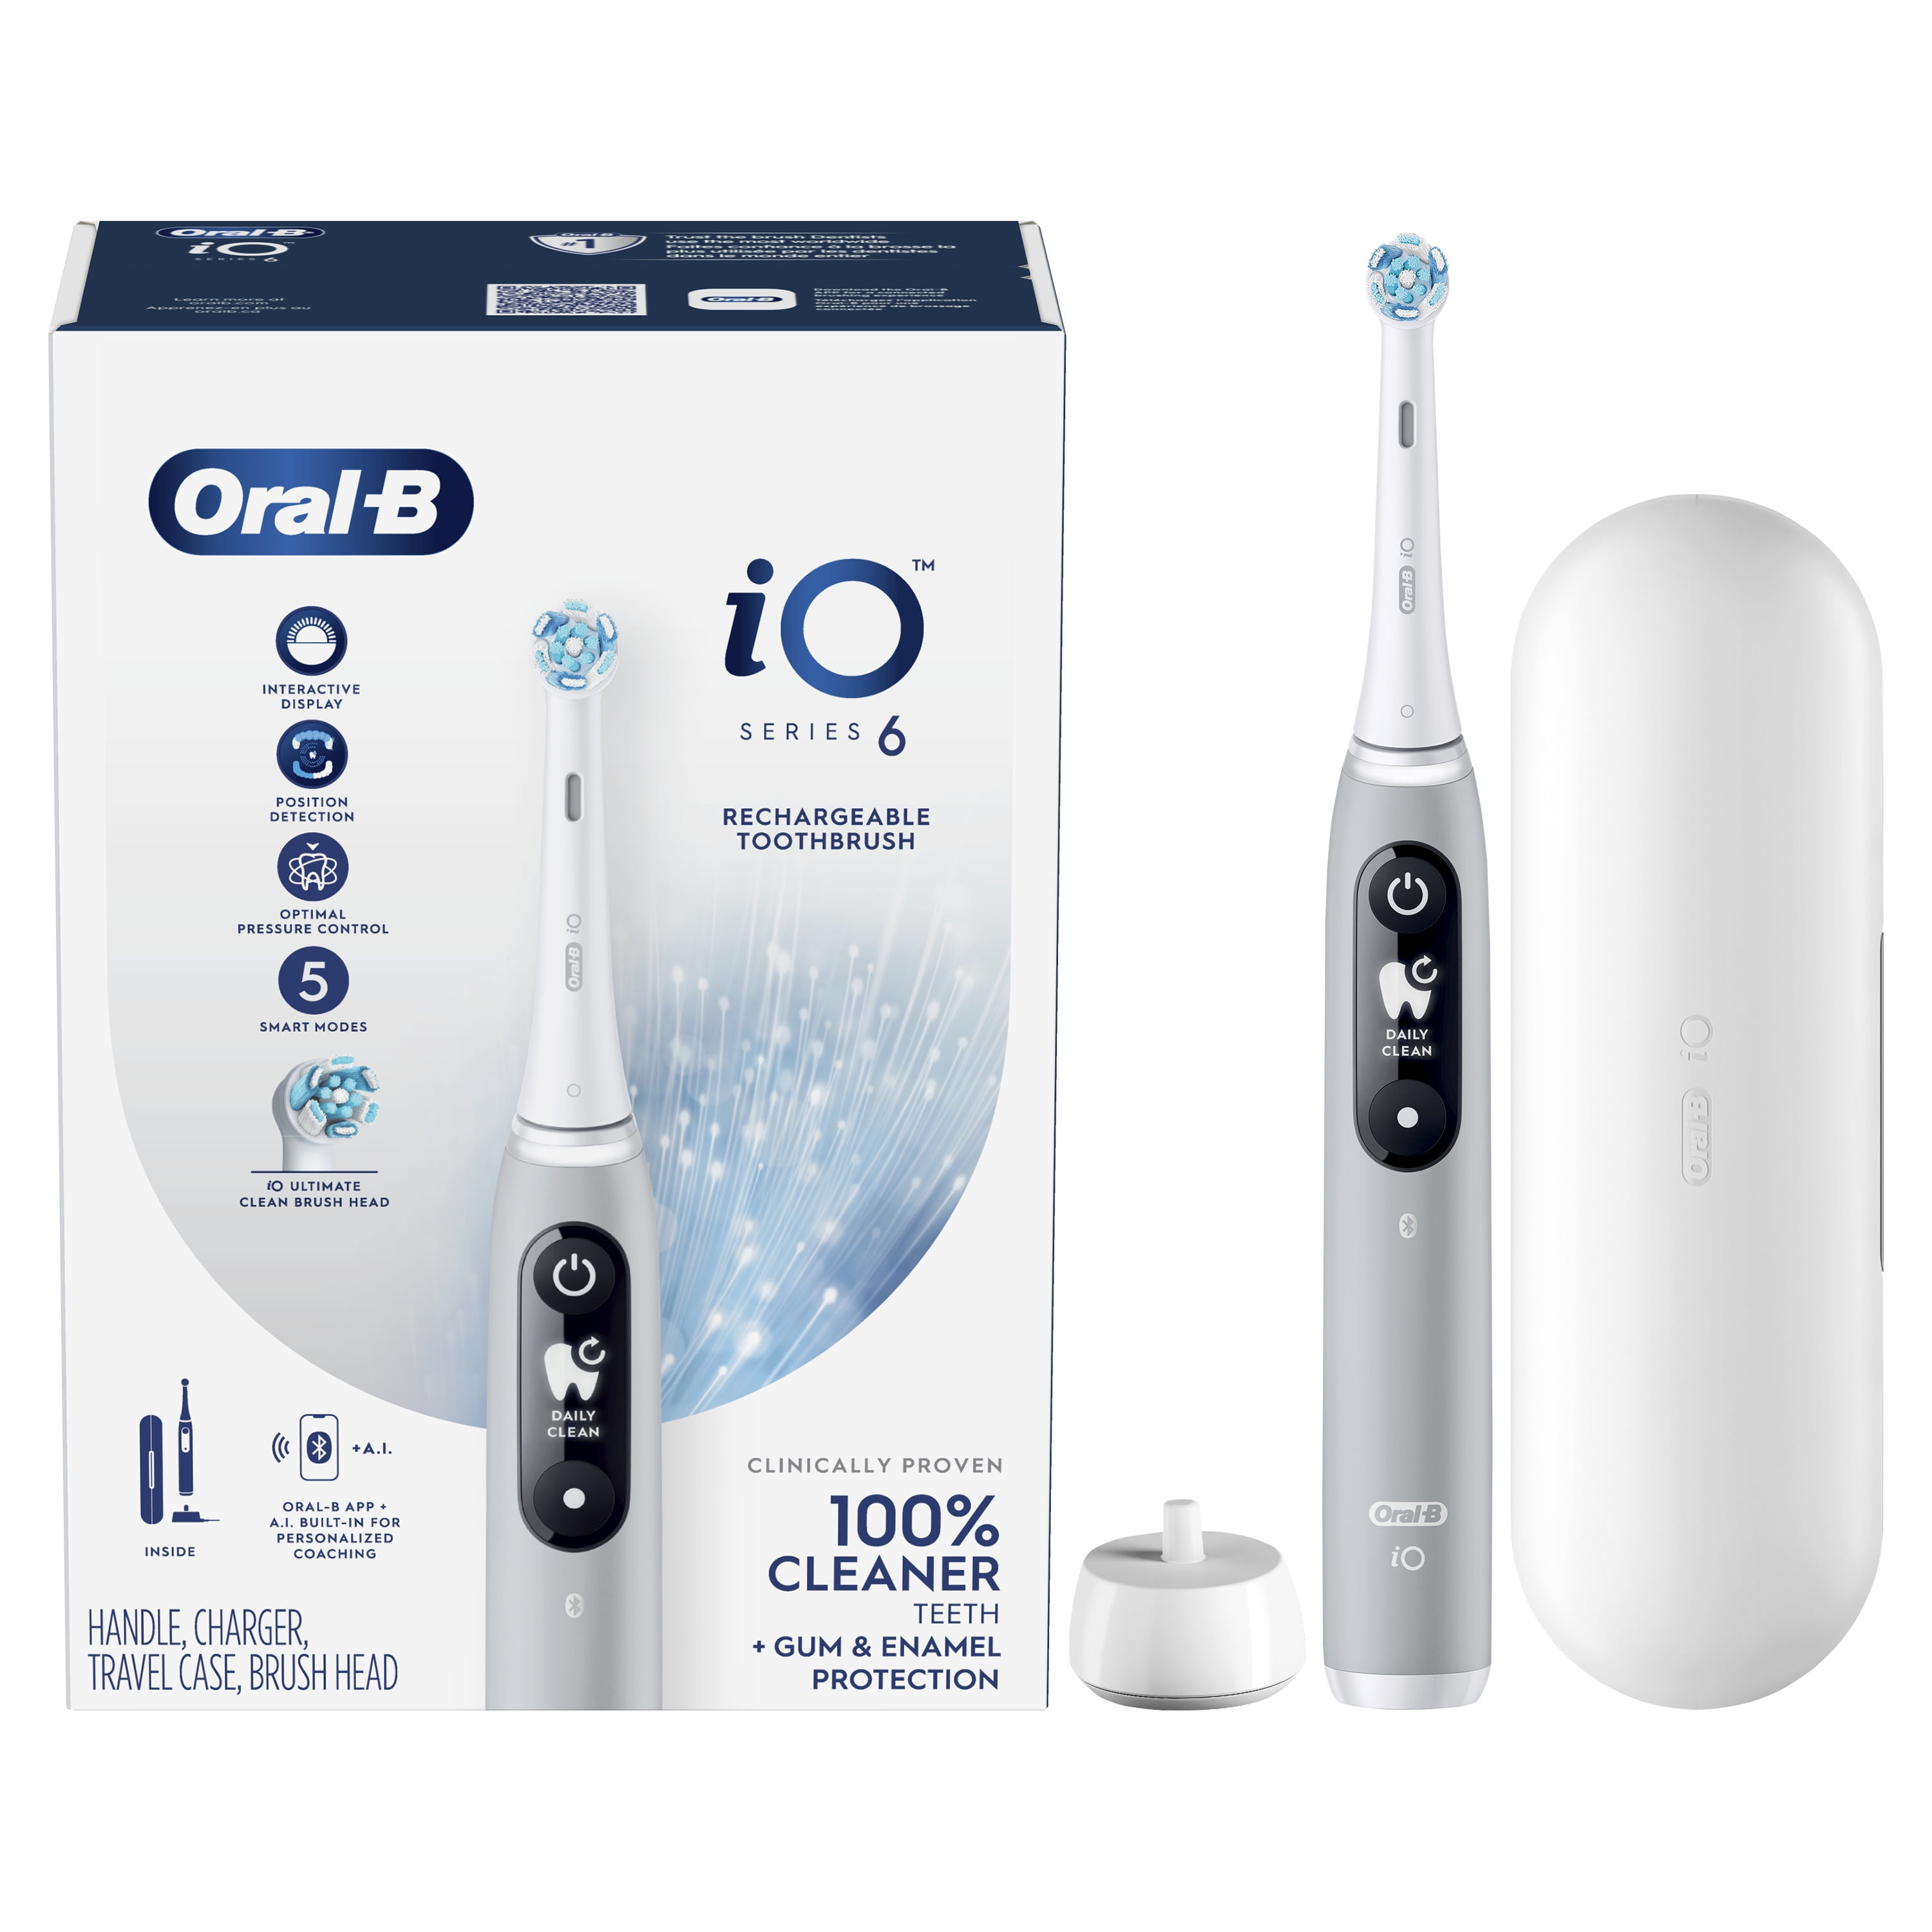 Oral-B iO Series 6 review